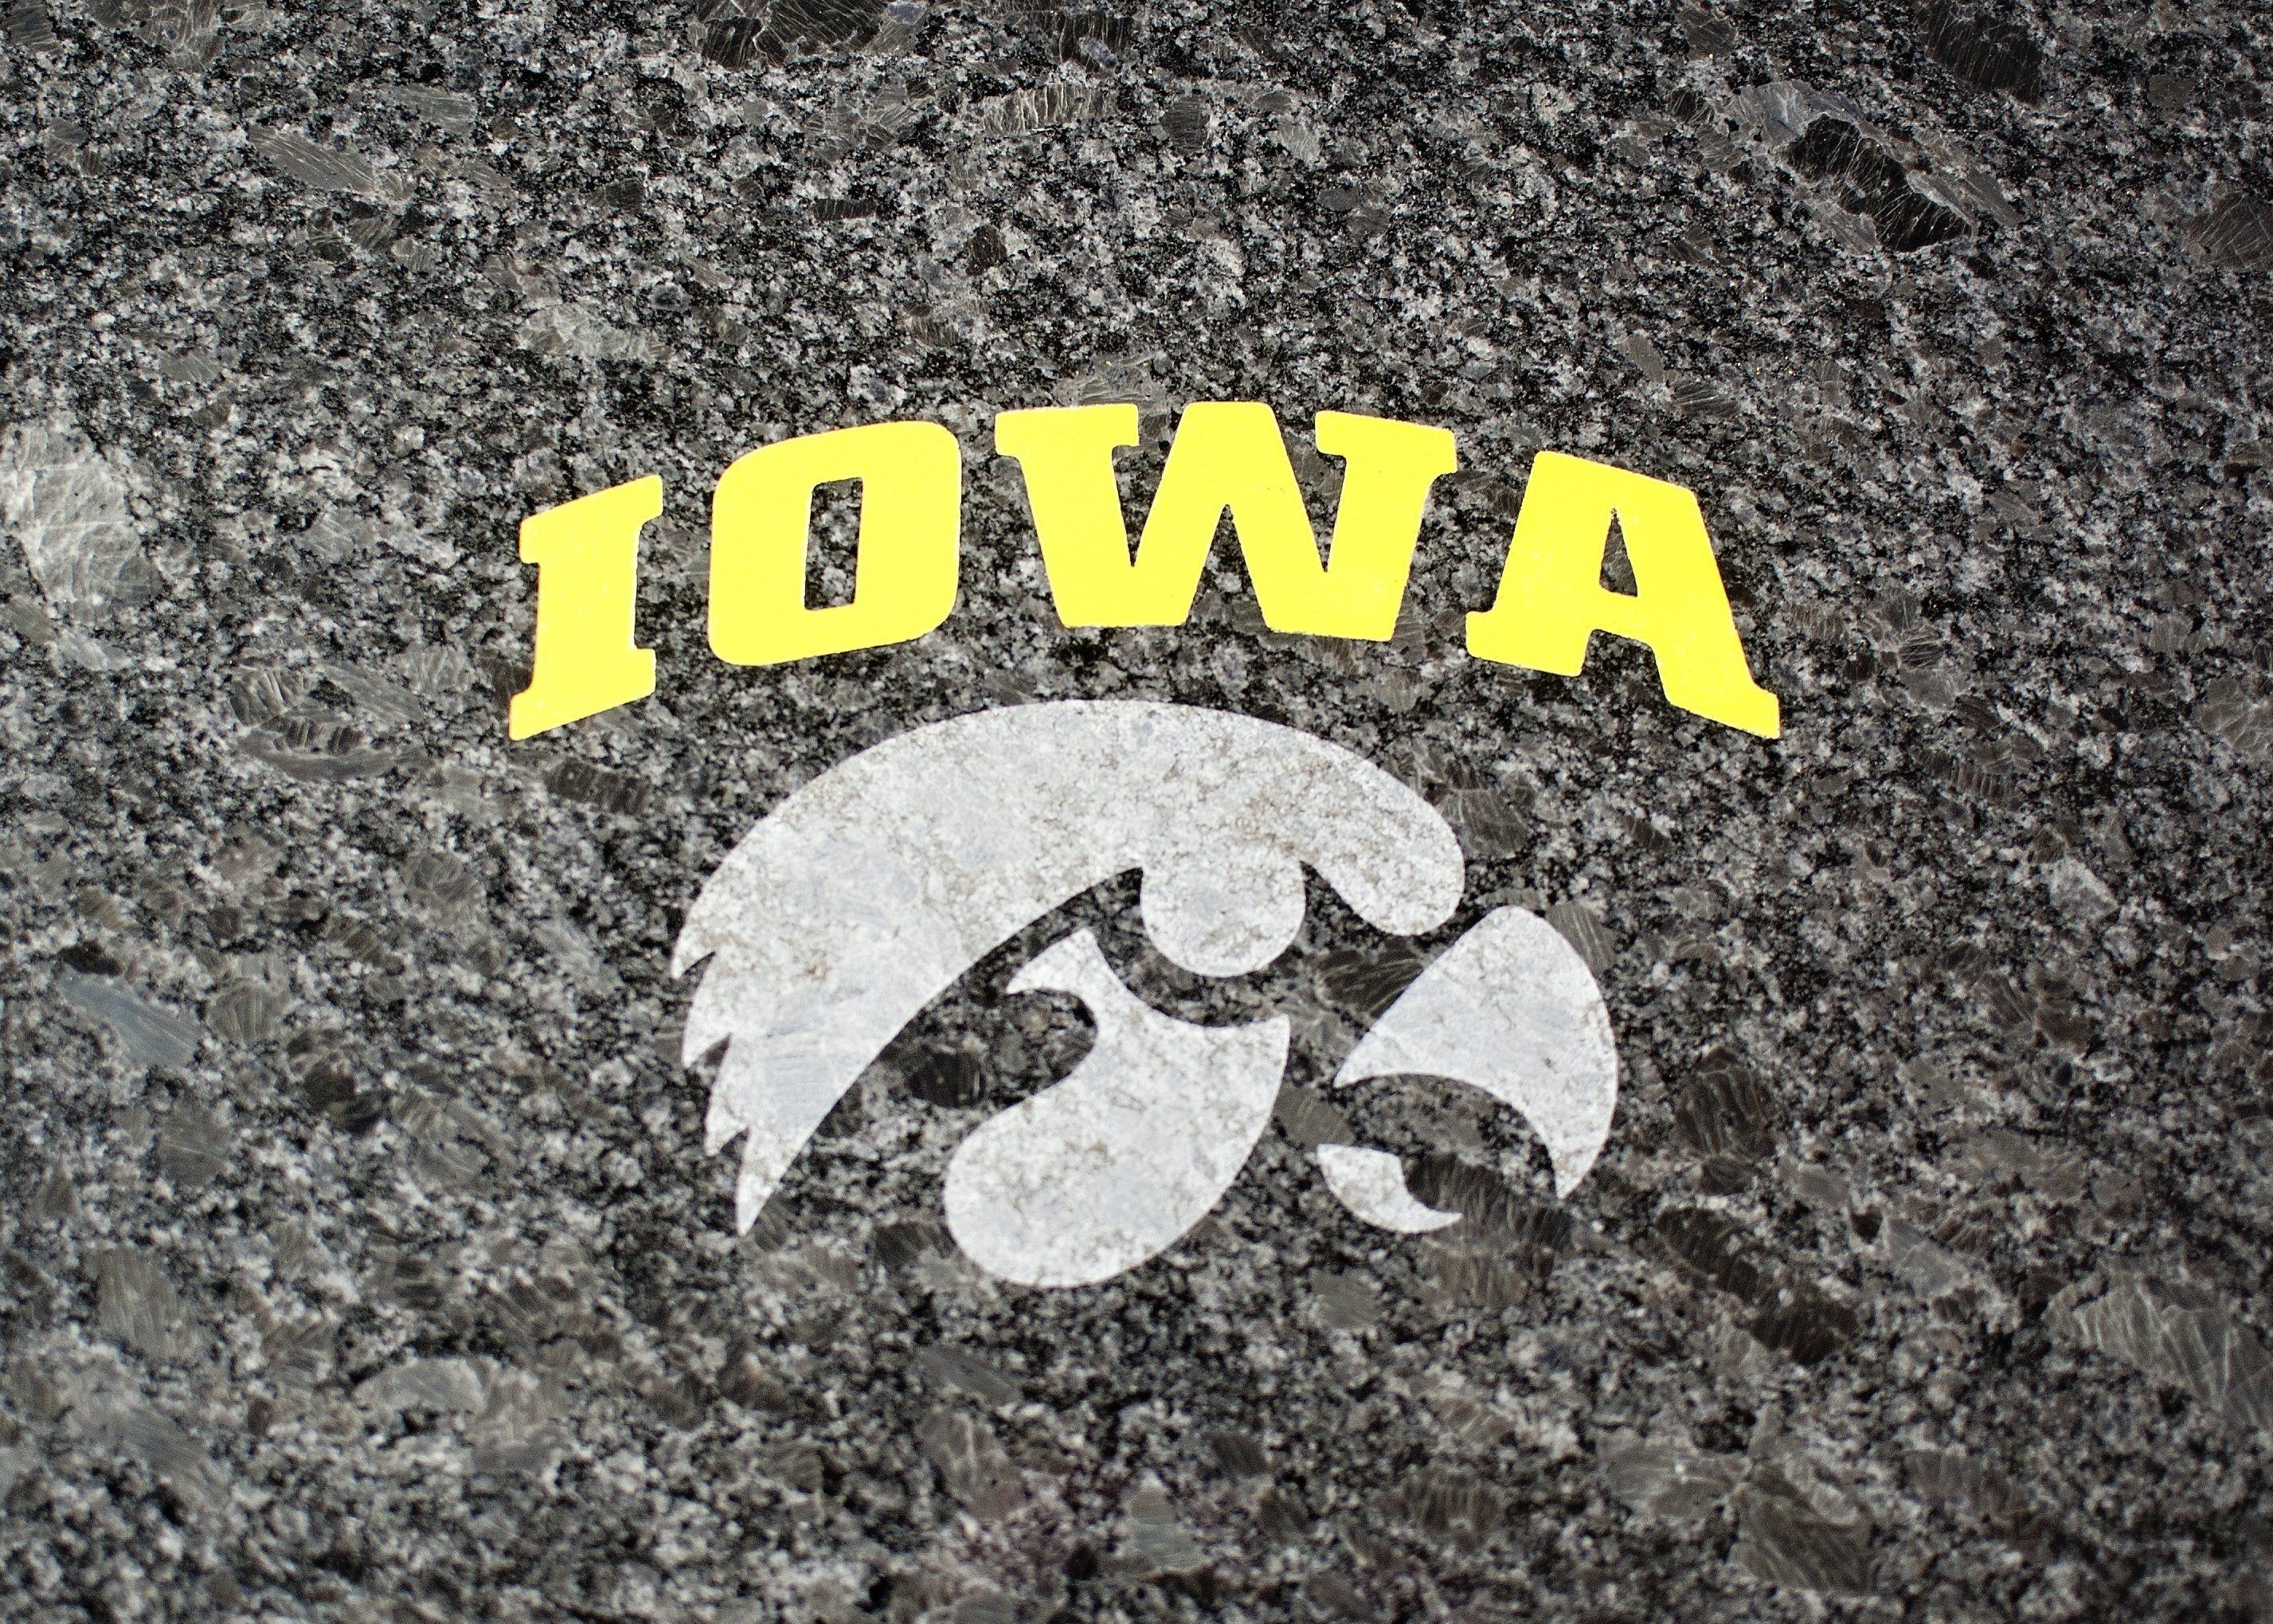 Iowa Hawkeyes Football IPhone Wallpaper on Behance